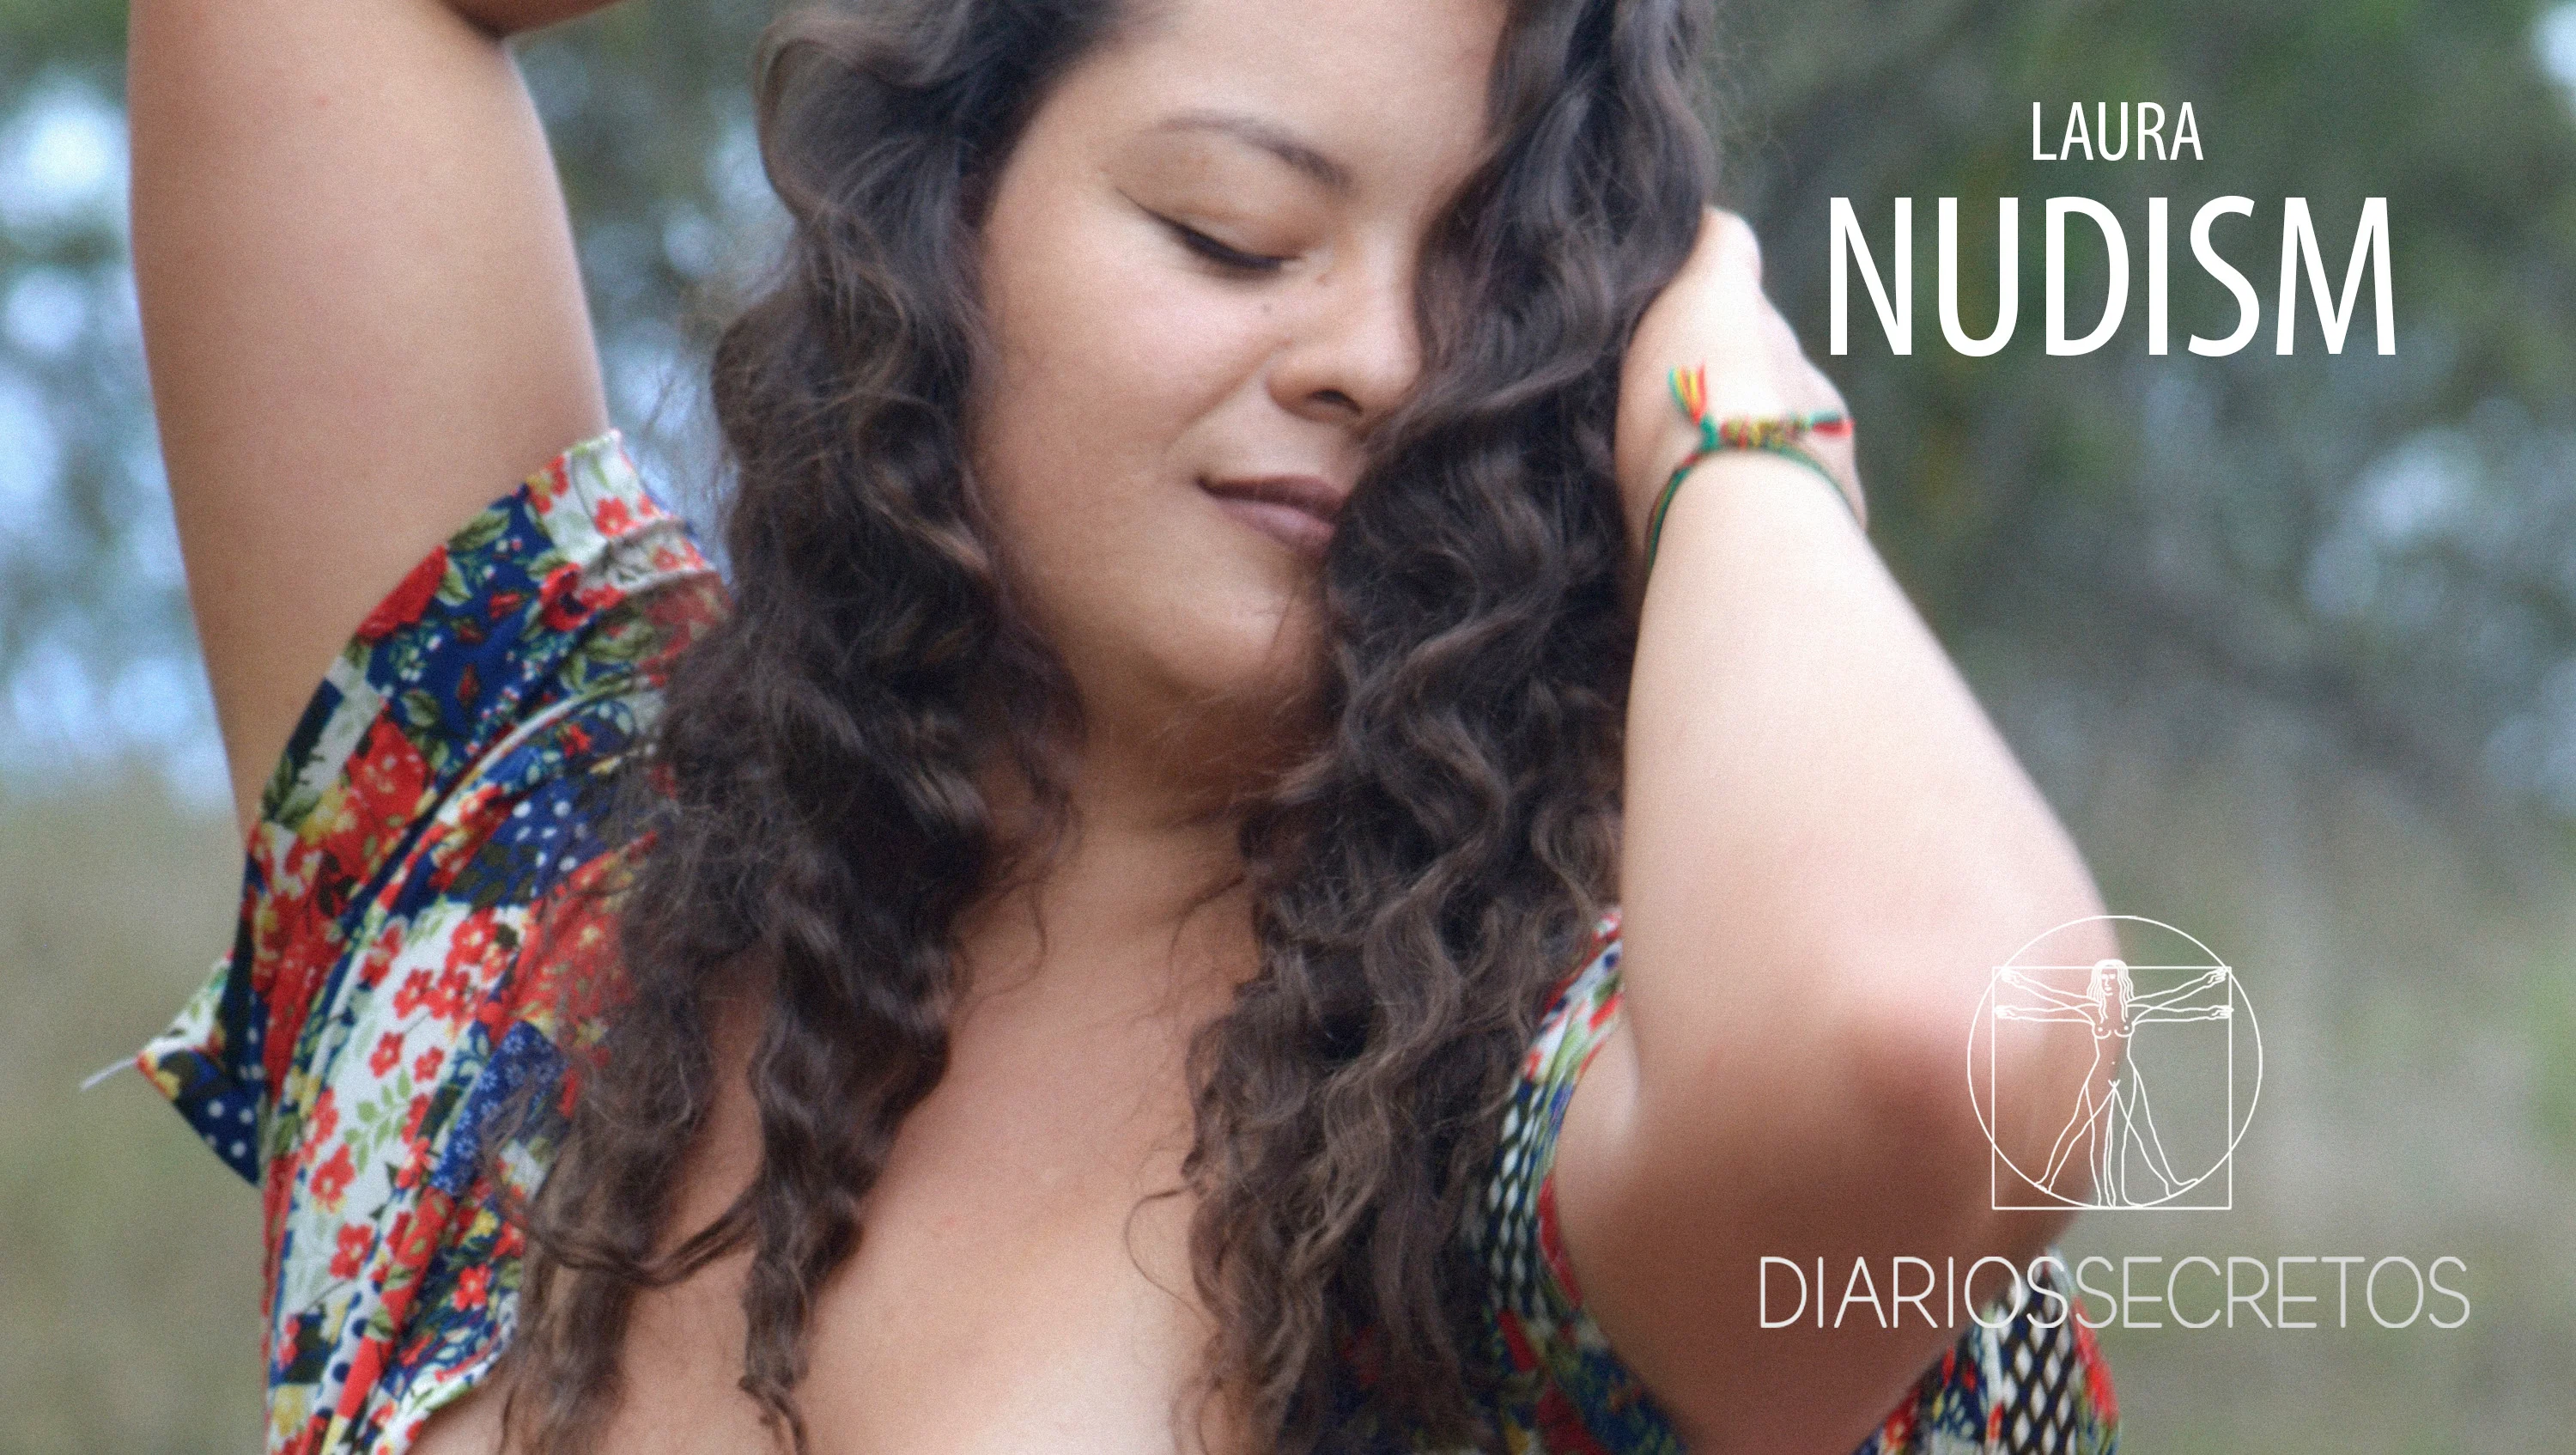 Watch Nudism Online | Vimeo On Demand on Vimeo